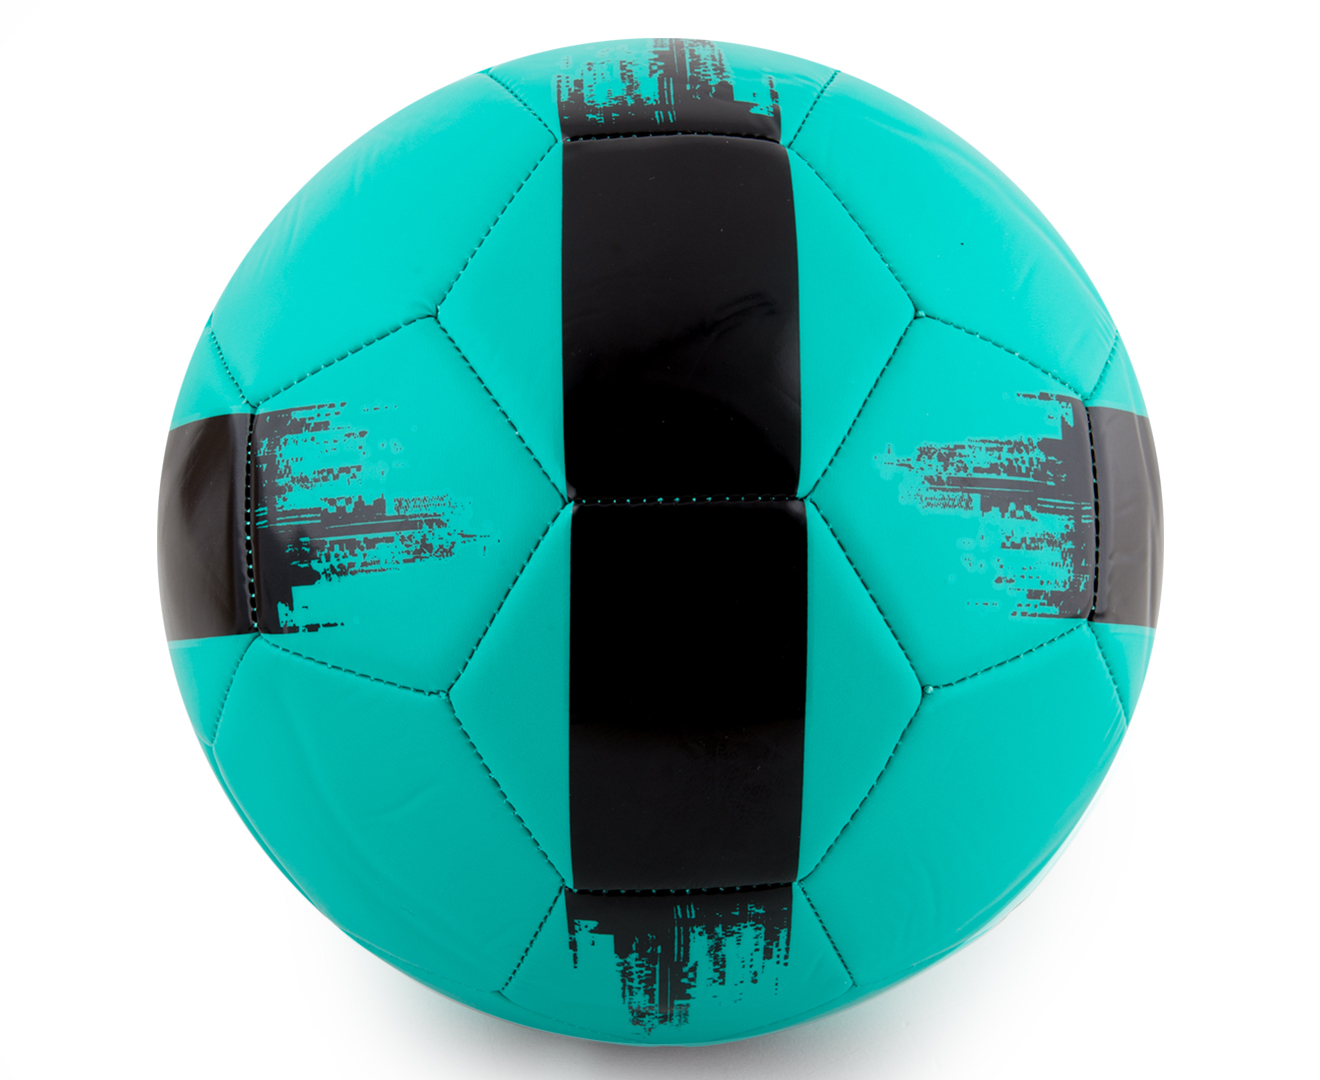 flexify 2 soccer ball